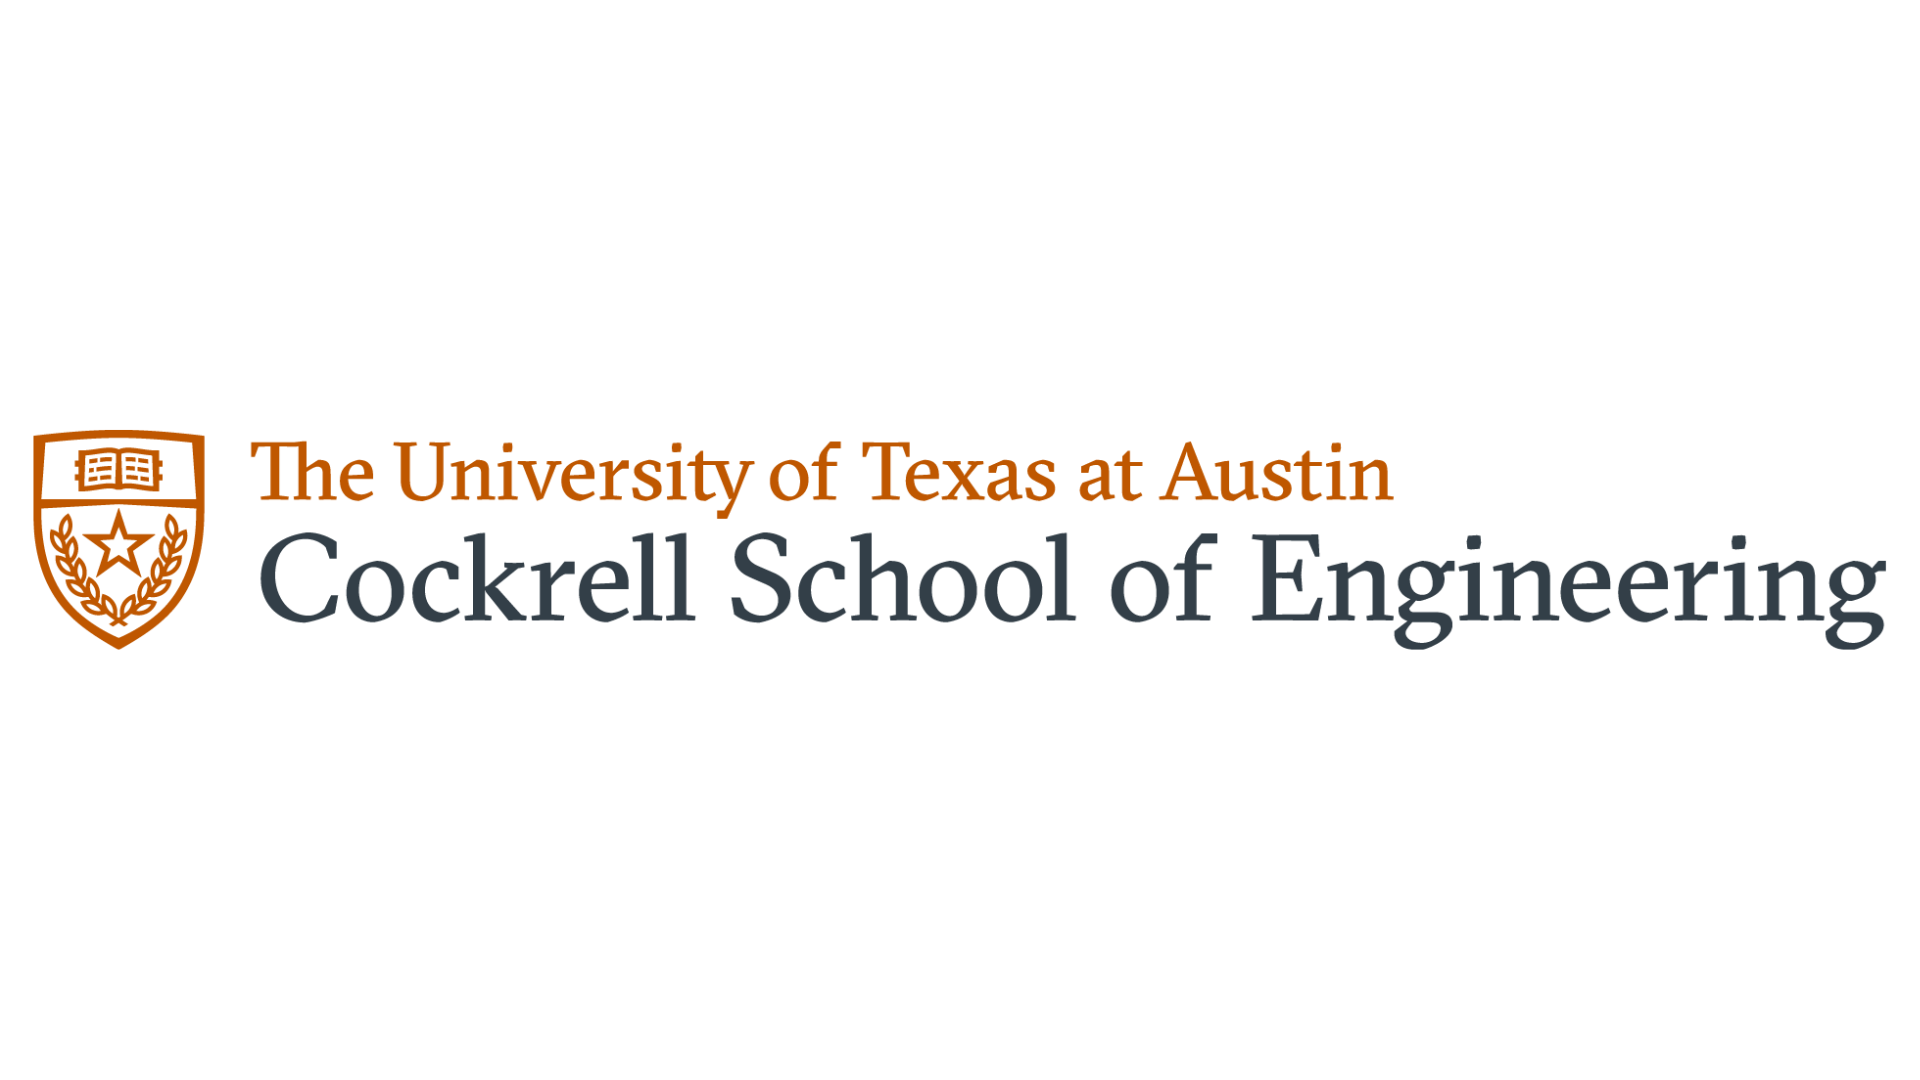 The University of Texas Cockrell School of Engineering logo